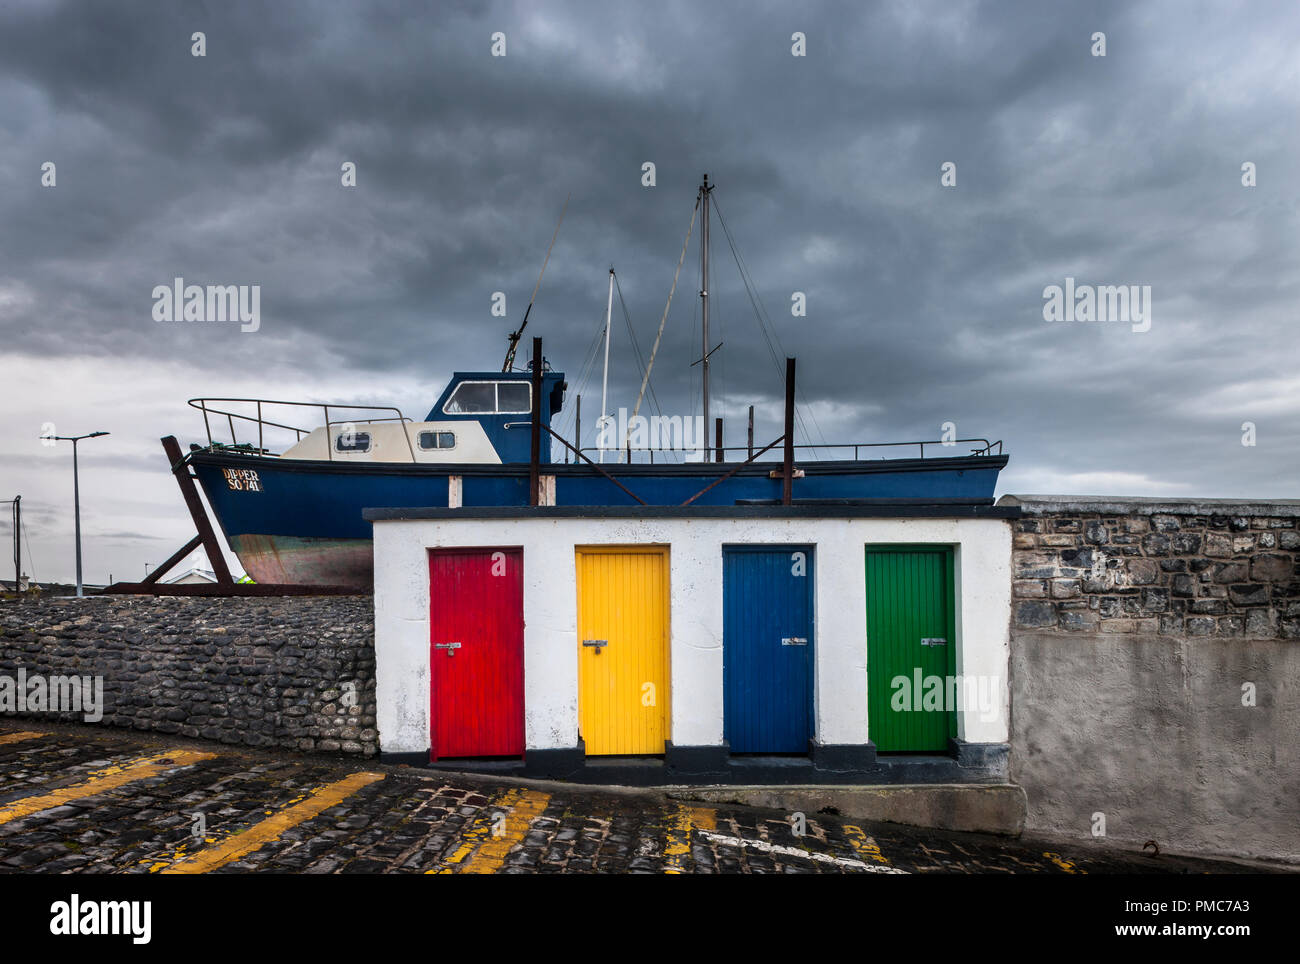 Enniscrone, Sligo, Ireland. 08th July 2017. Doors to storage units on the slipway at Enniscrone Pier Co. Sligo, Ireland Stock Photo